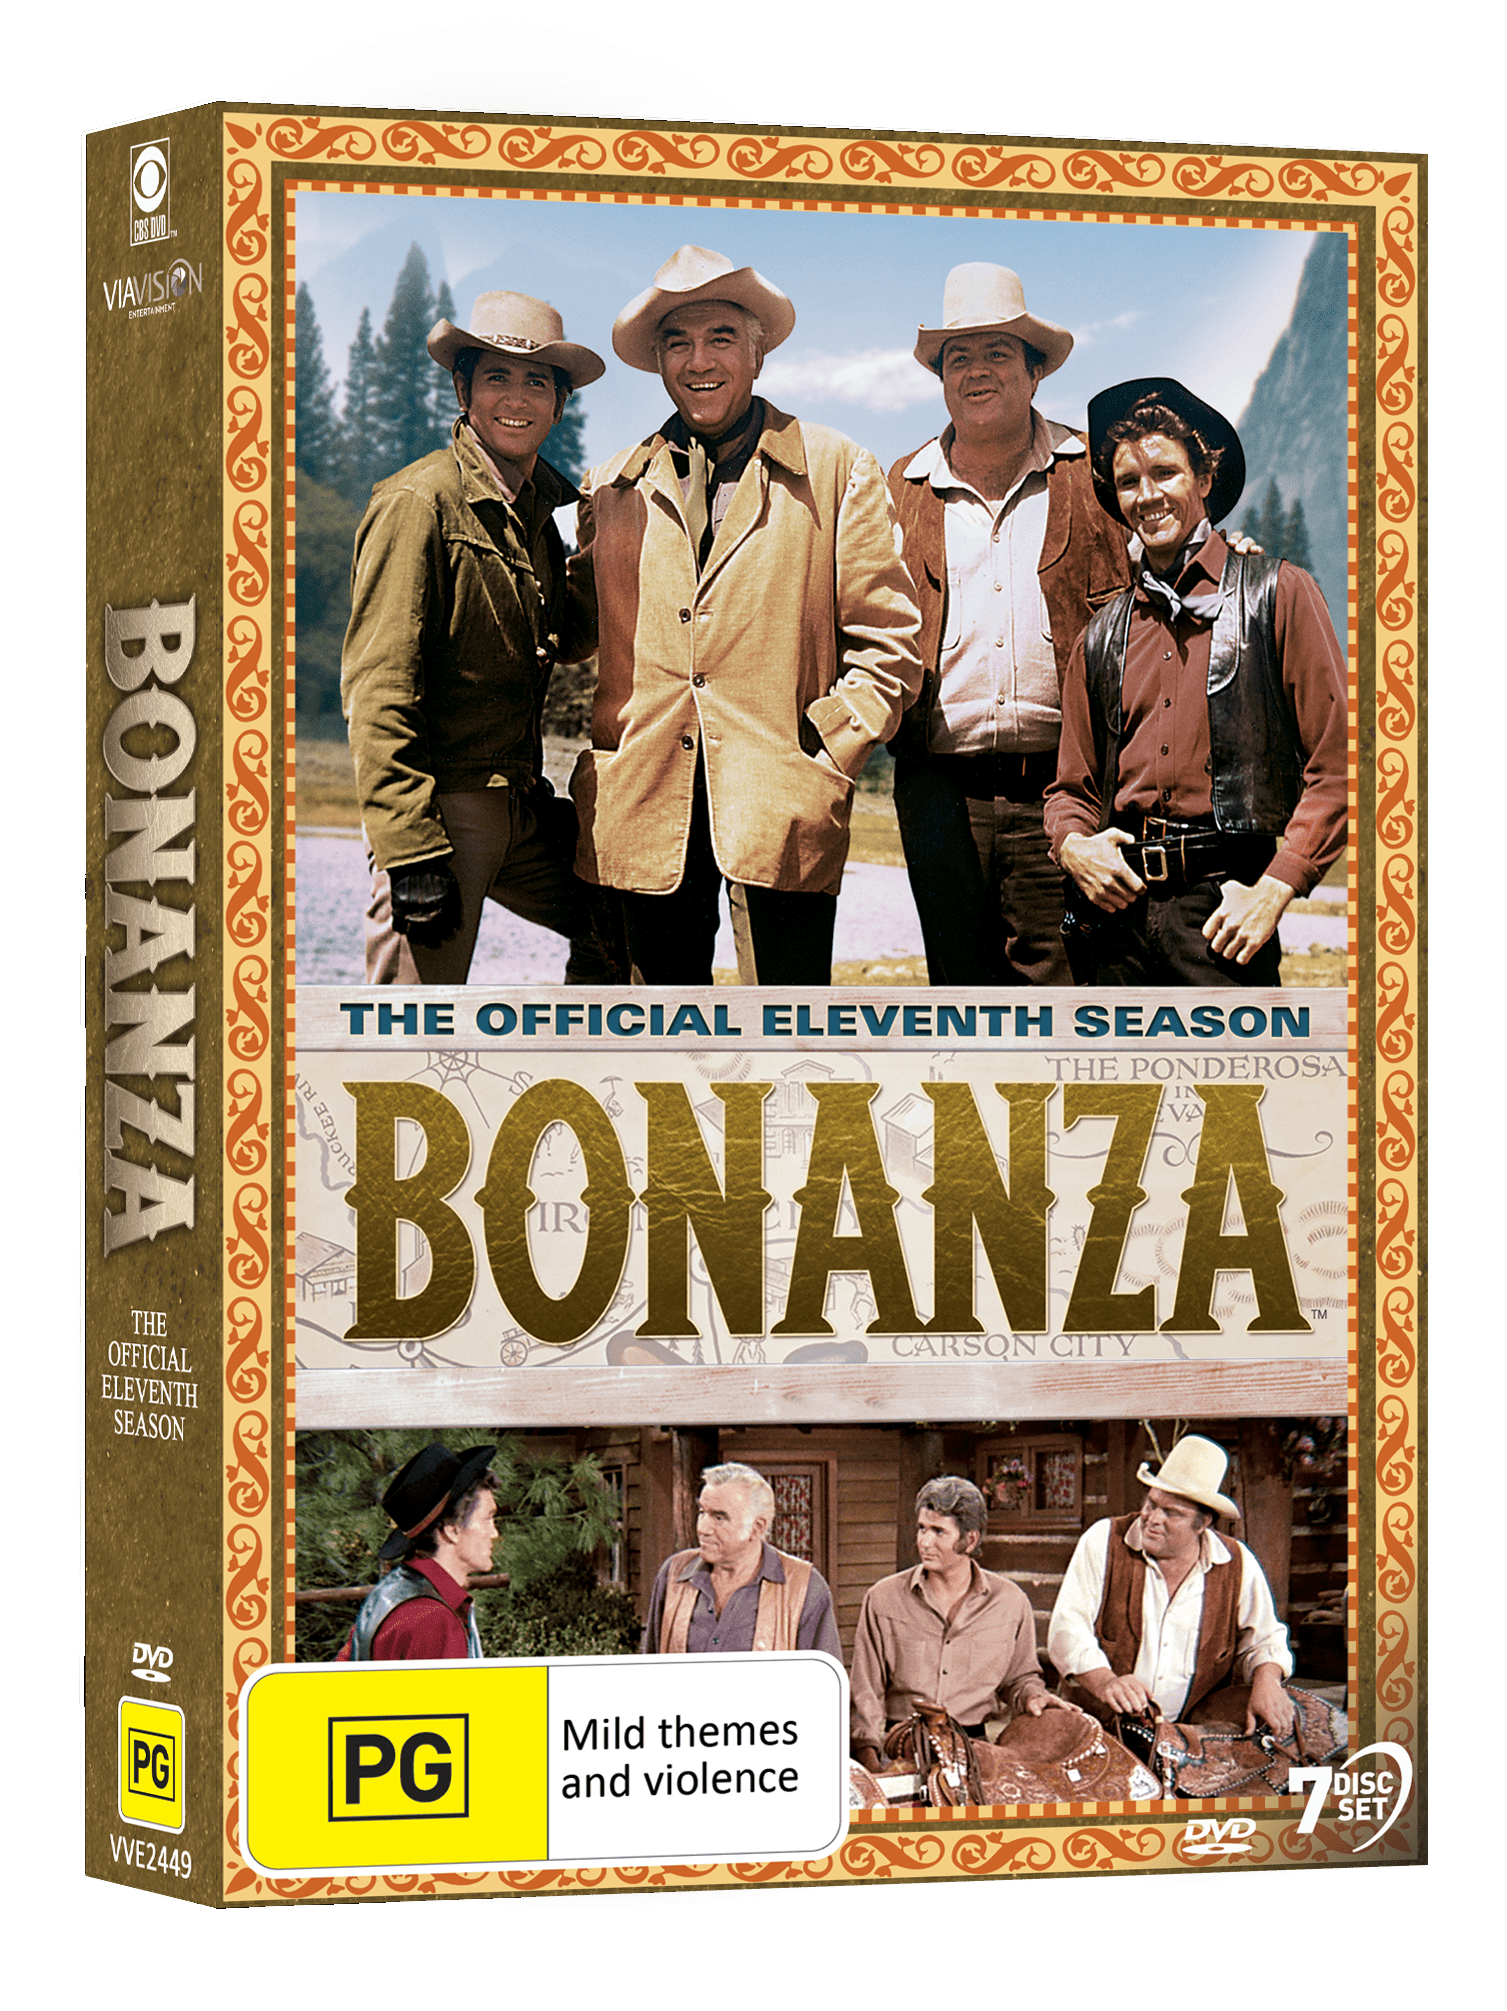 Bonanza The Official Eleventh Season Via Vision Entertainment